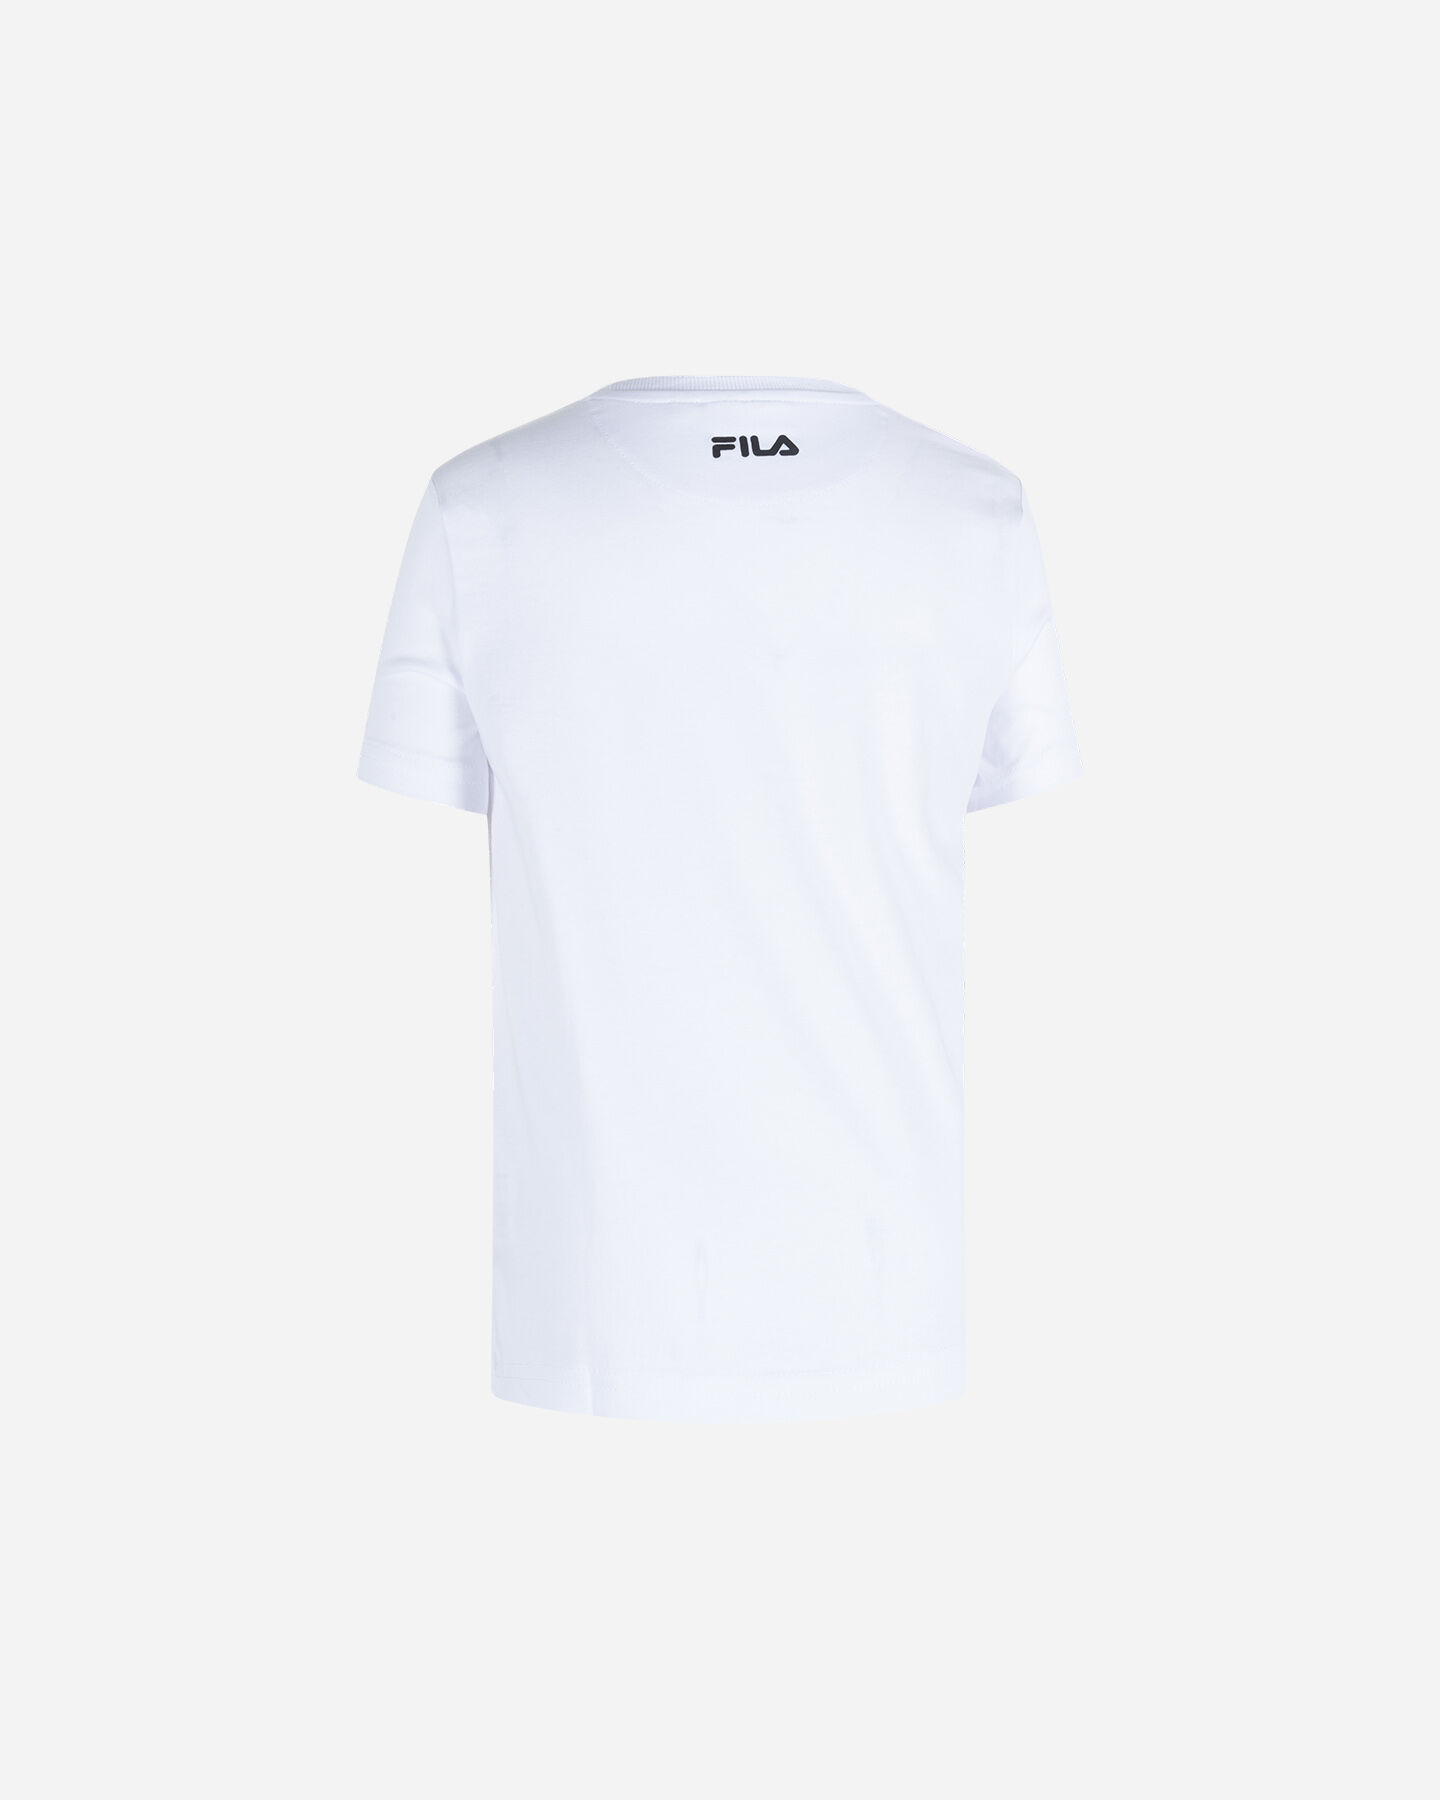  T-Shirt FILA GRAPHIC PUNK JR S4119658|001|6A scatto 1